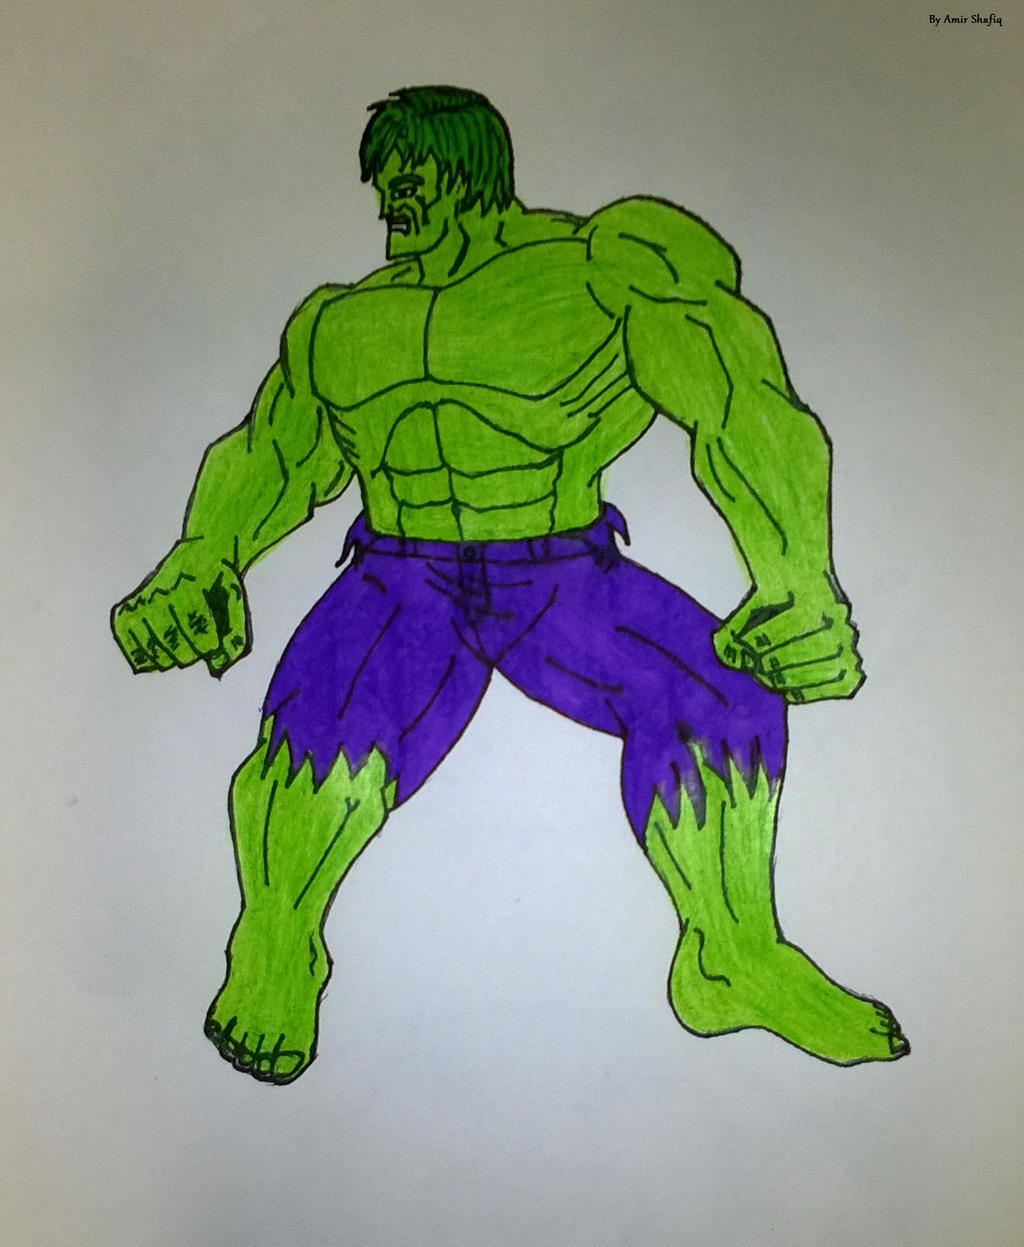 HULK - The Incredible Hulk 1996 by 4M1R on DeviantArt